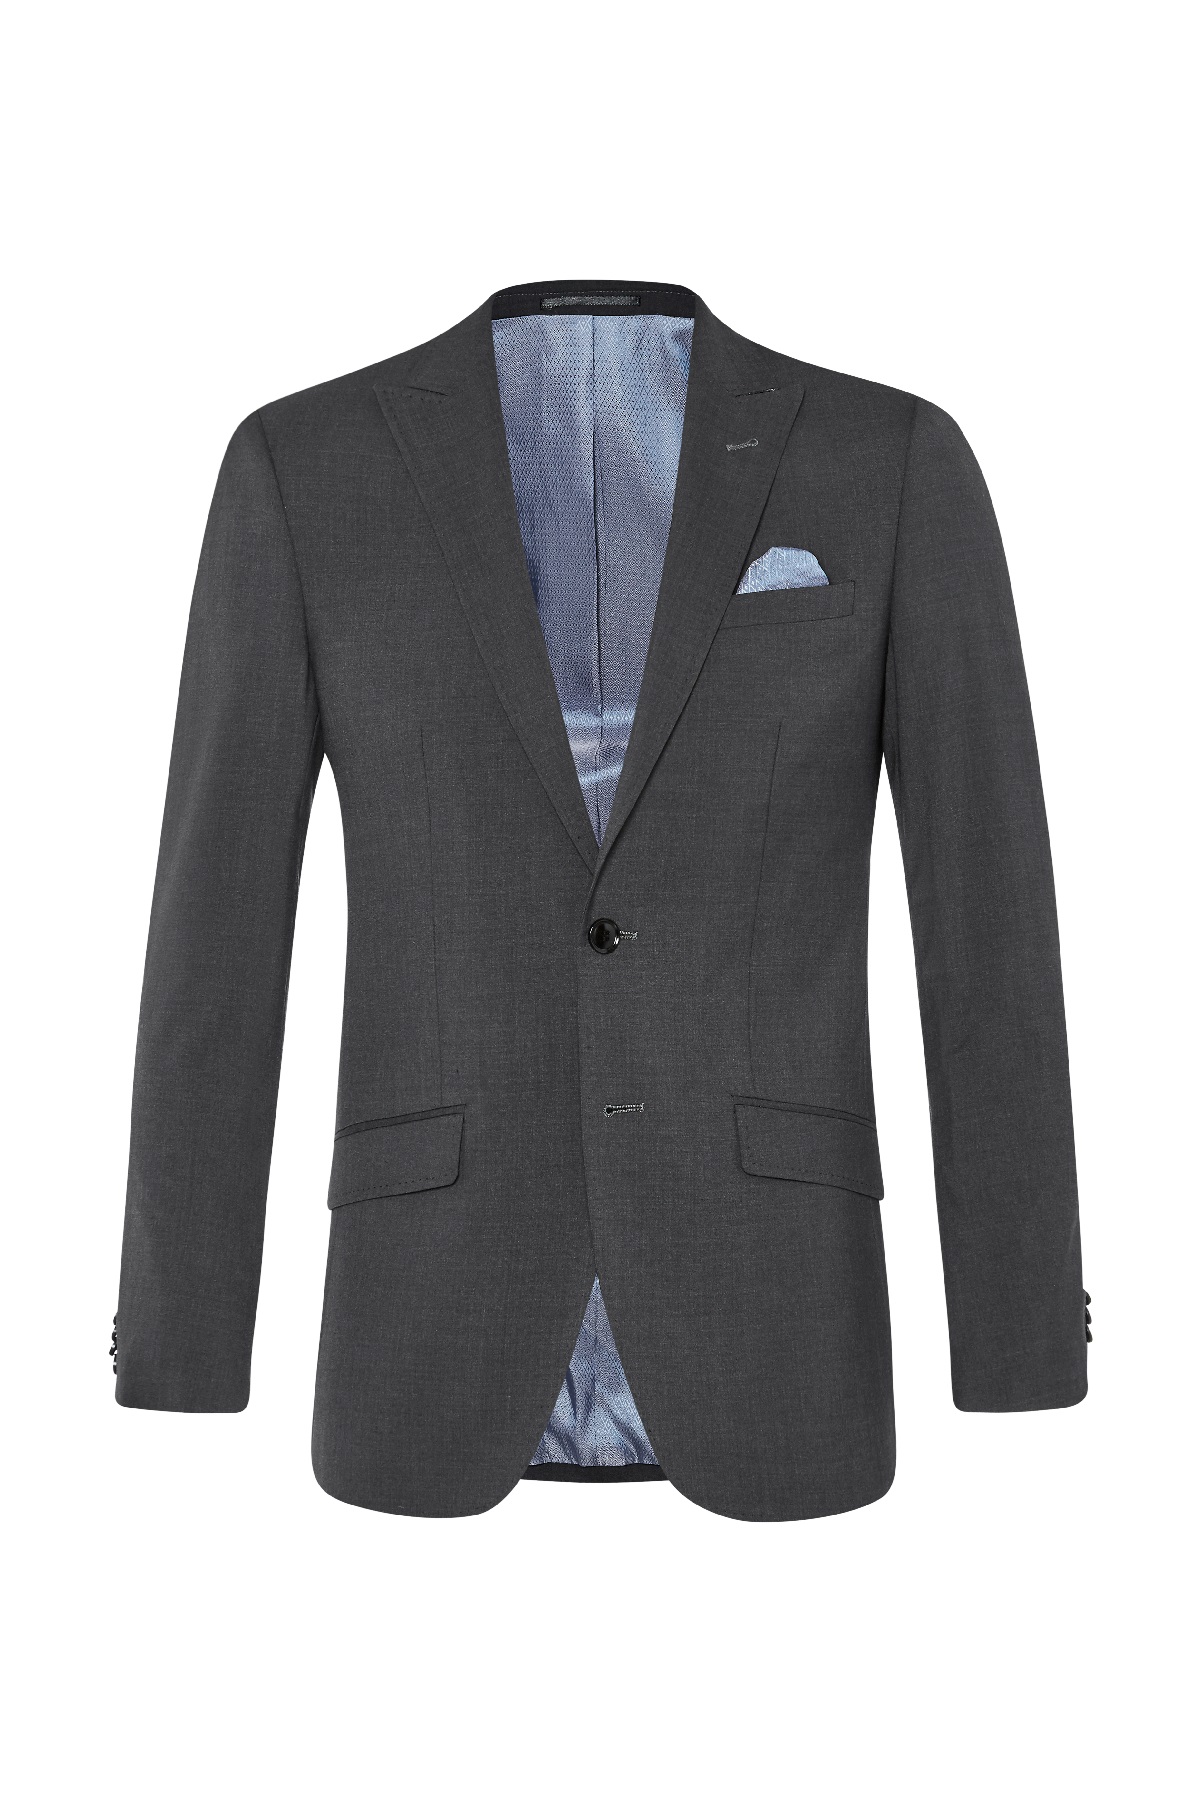 Uberstone Brandon 3125 Suit Jacket - Tramps the Store